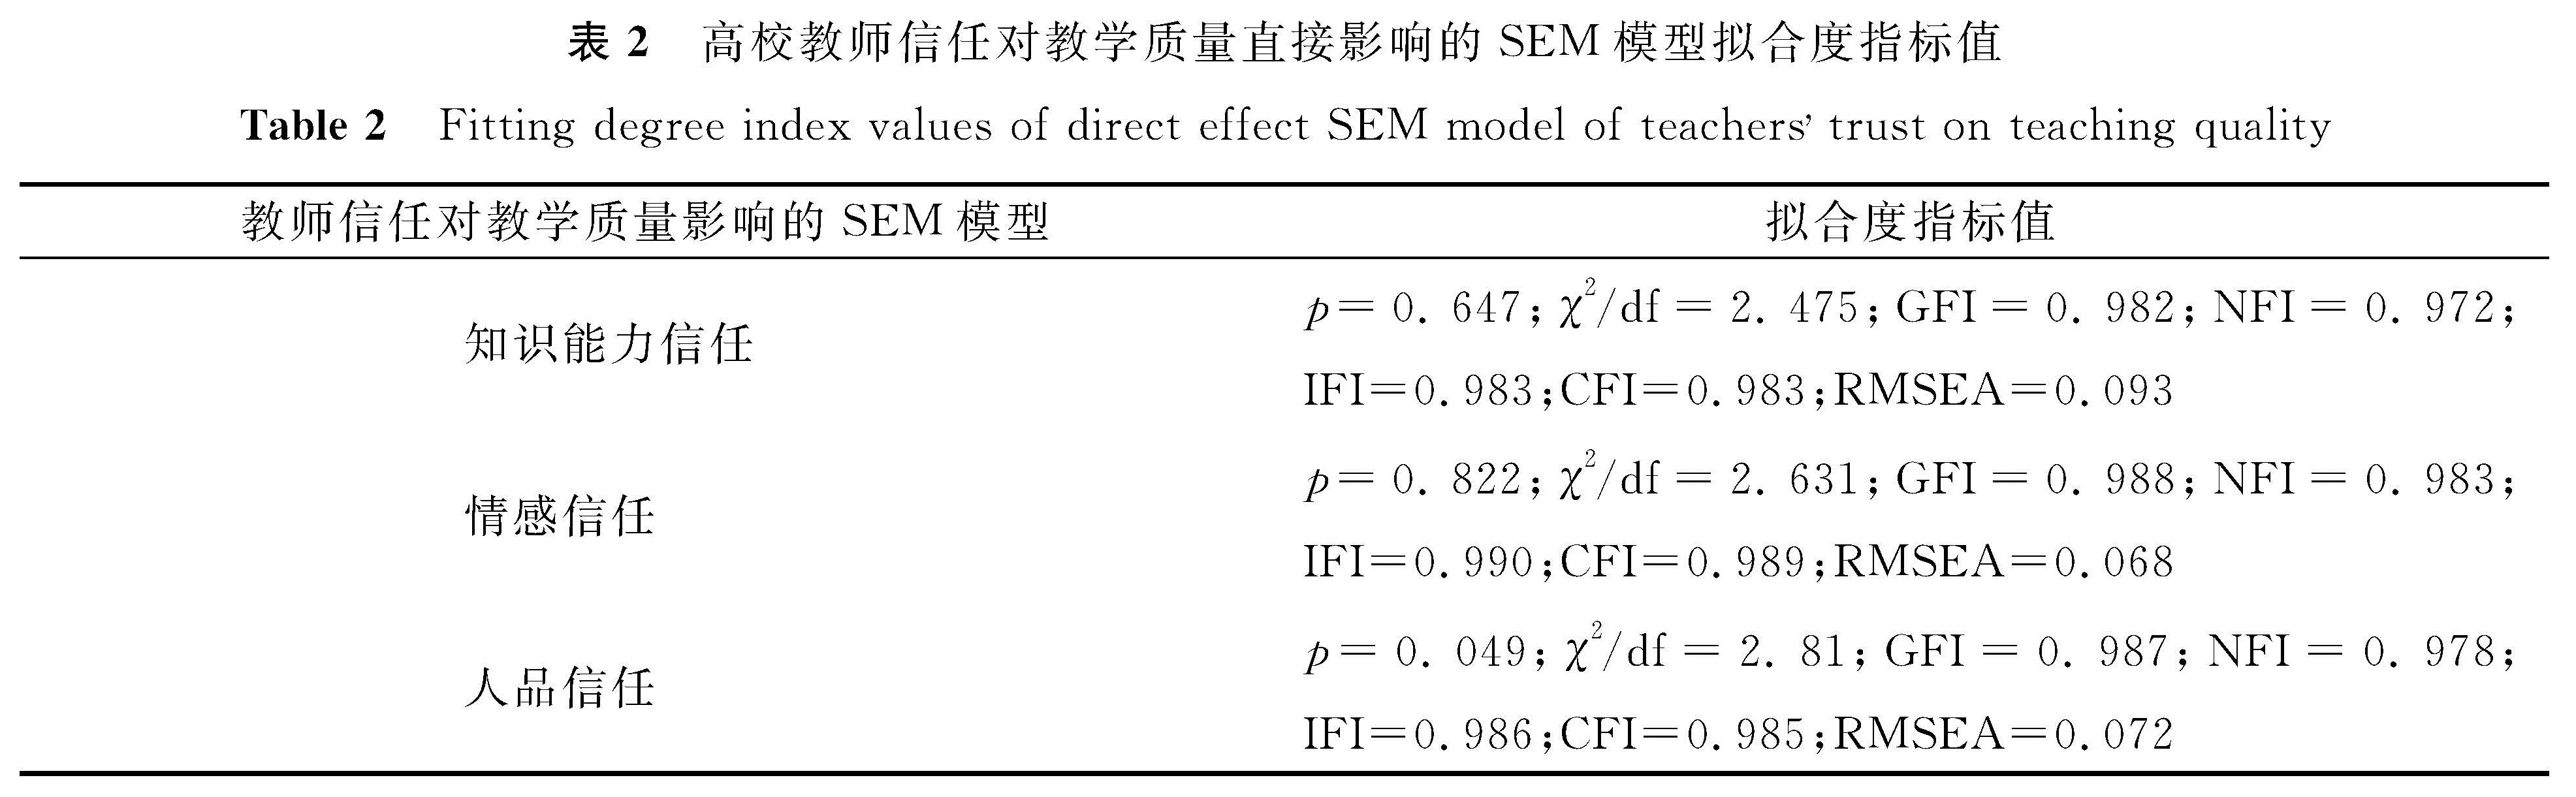 表2 高校教师信任对教学质量直接影响的SEM模型拟合度指标值<br/>Table 2 Fitting degree index values of direct effect SEM model of teachers trust on teaching quality